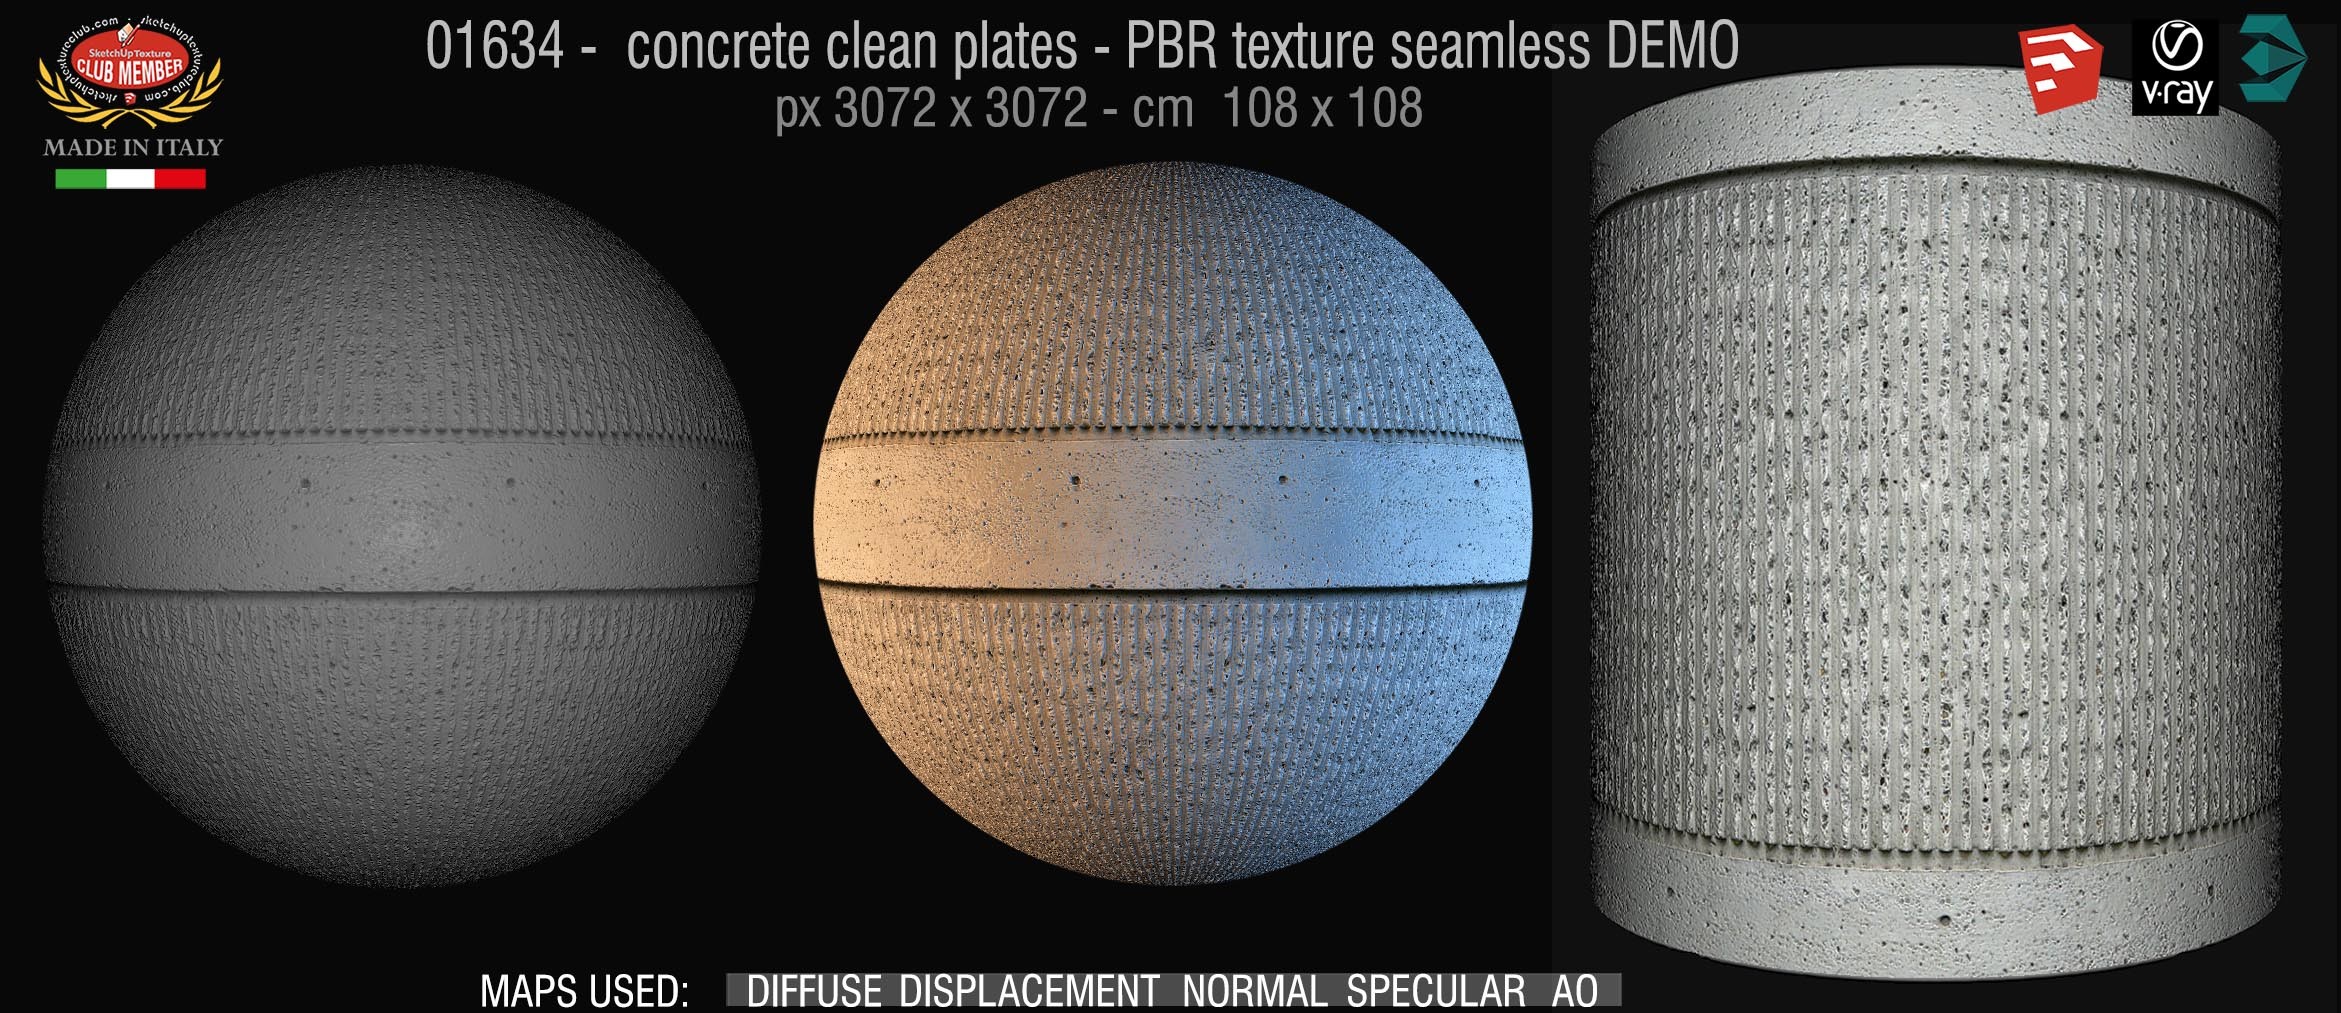 01634 concrete clean plates wall PBR texture seamless DEMO